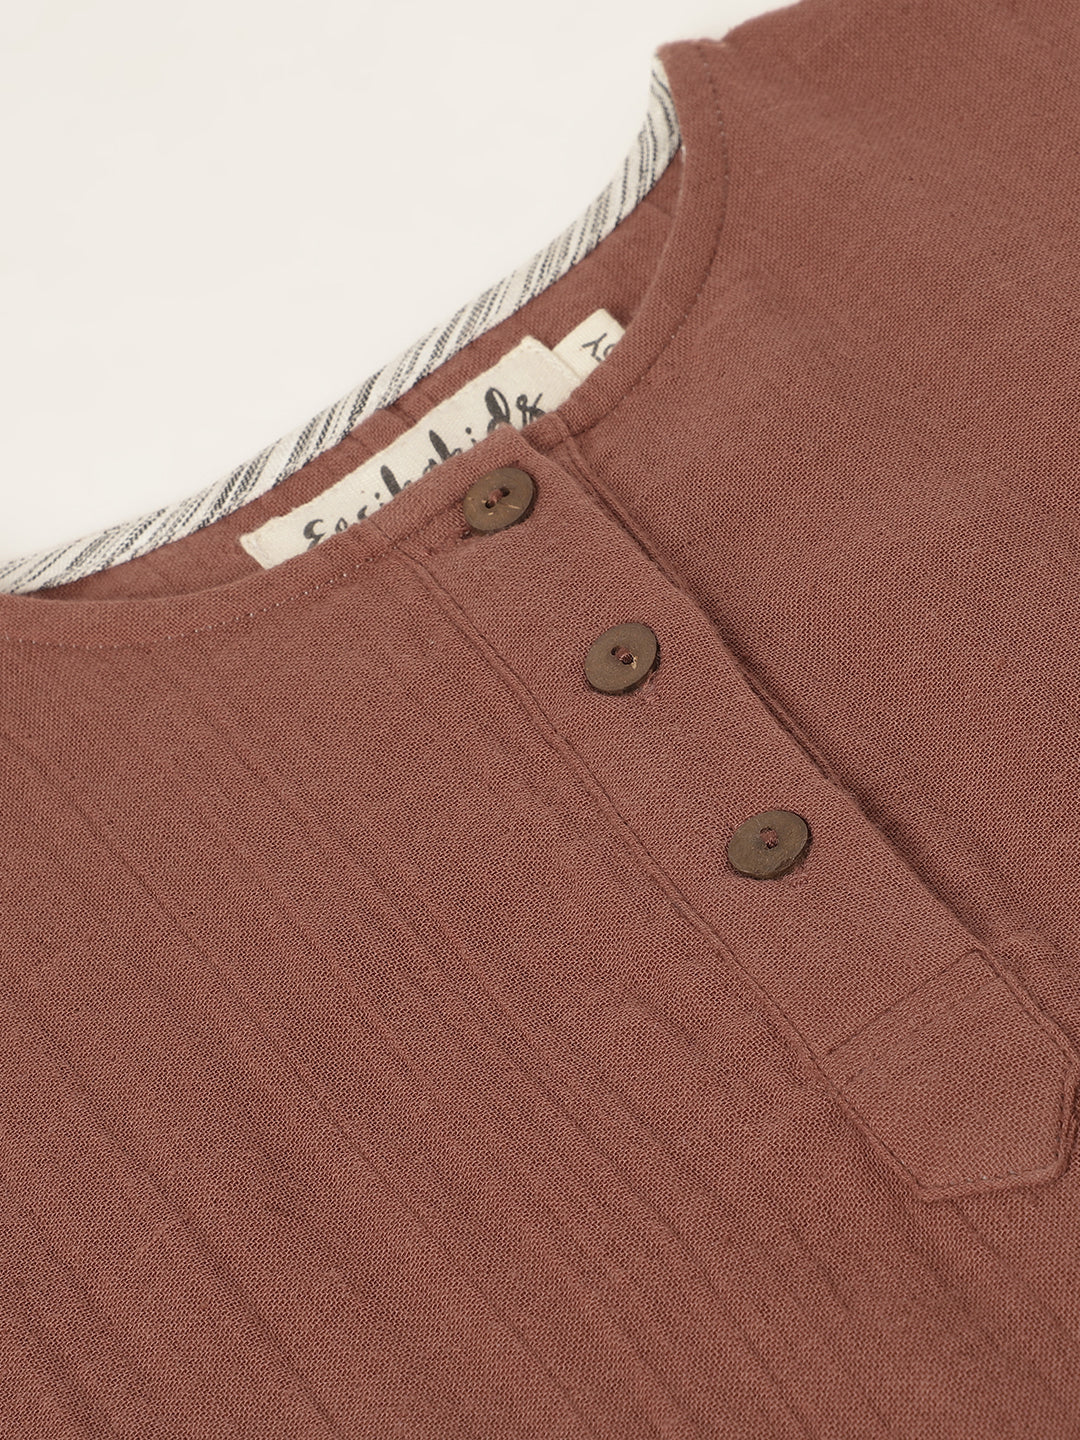 Boys Shirt & Pants Set| Organic Cotton | Rust Brown | 1Yr to 8 Yrs